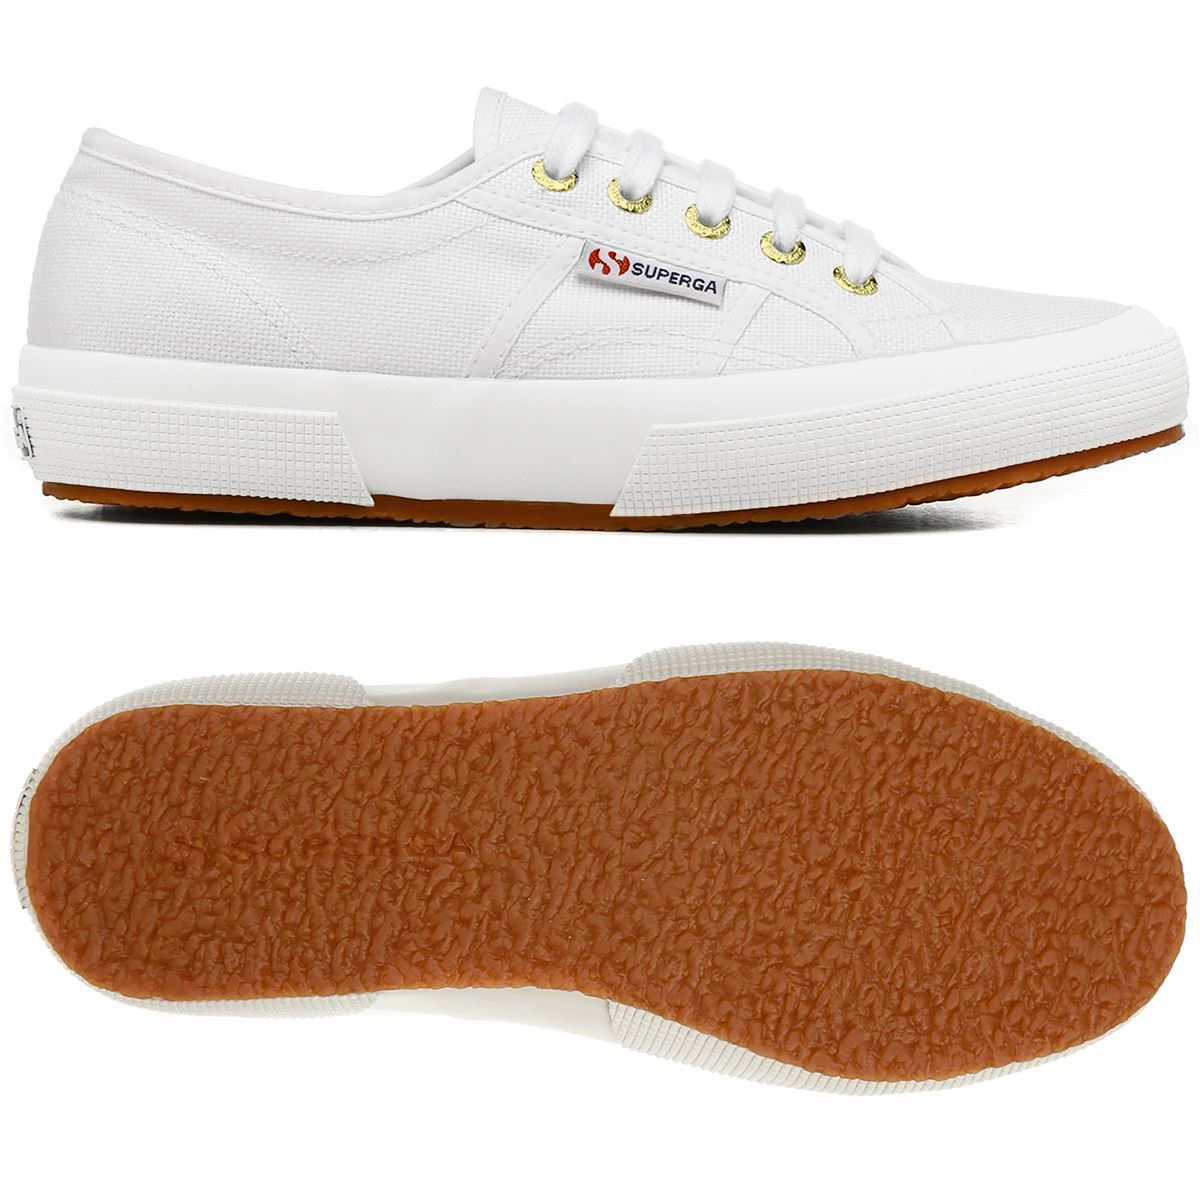 Superga 2750 Cotu Classic White Canvas Sneakers - Niutrack.com